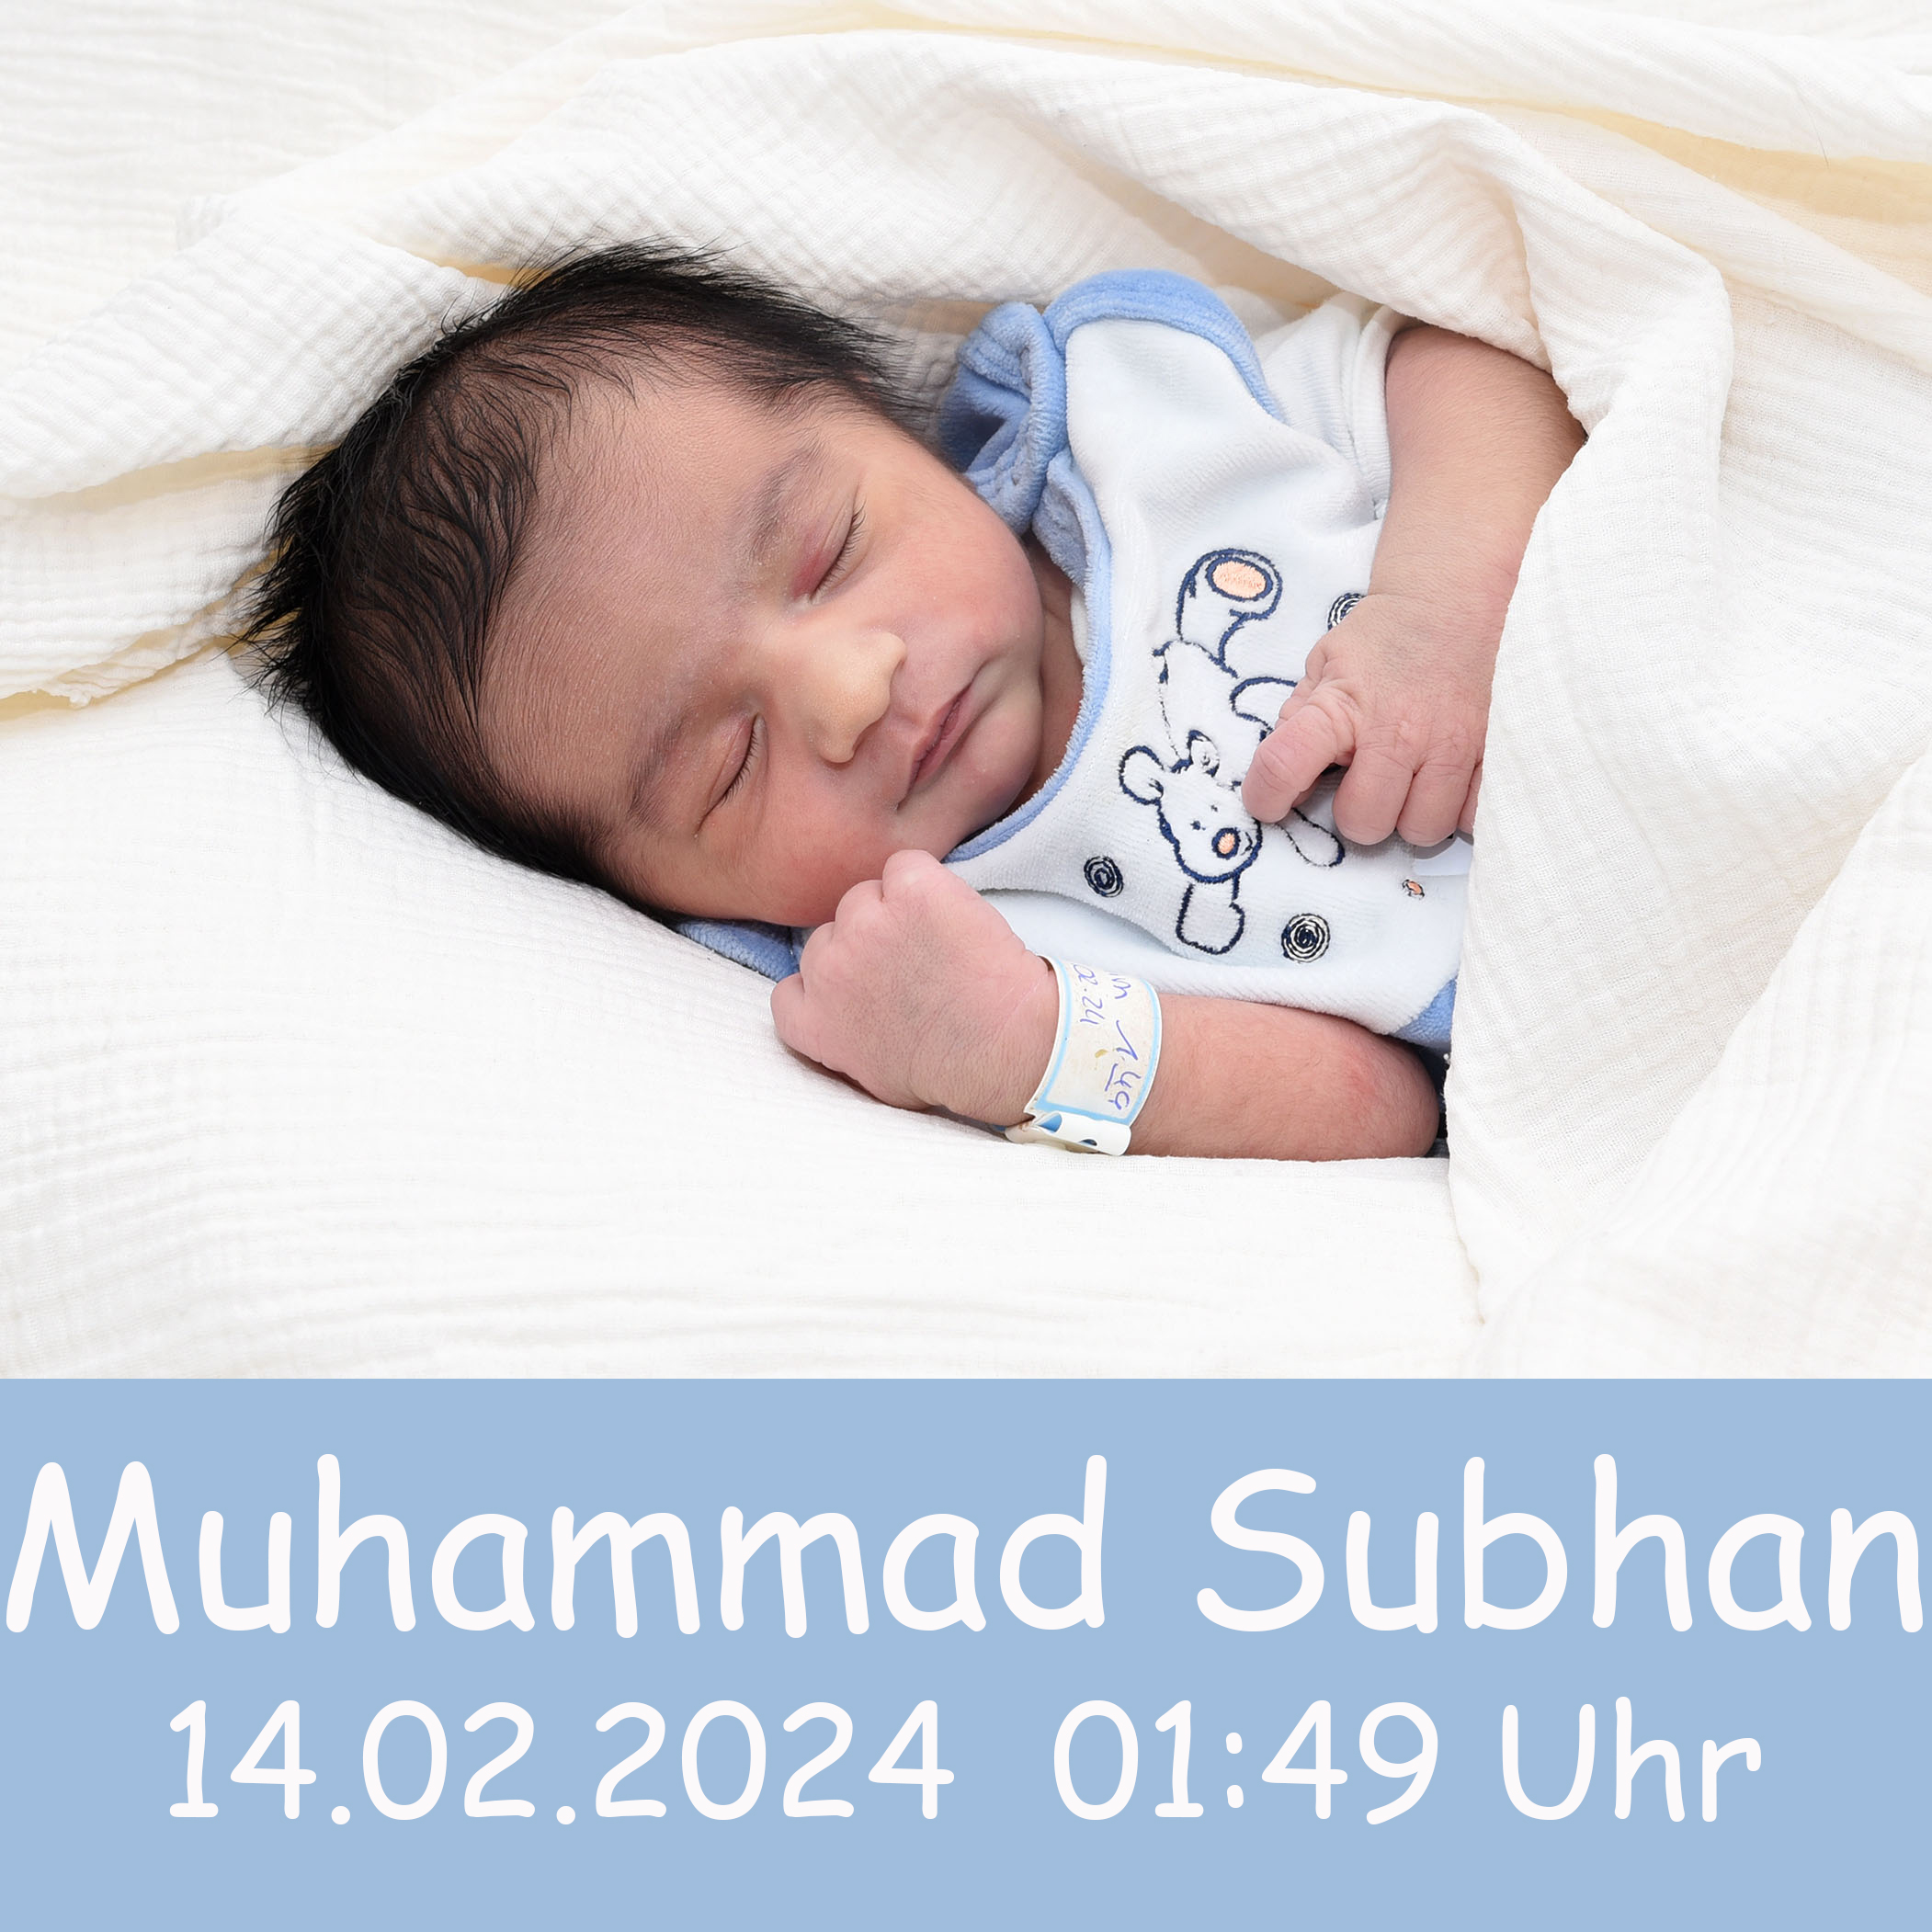 Baby Muhammad